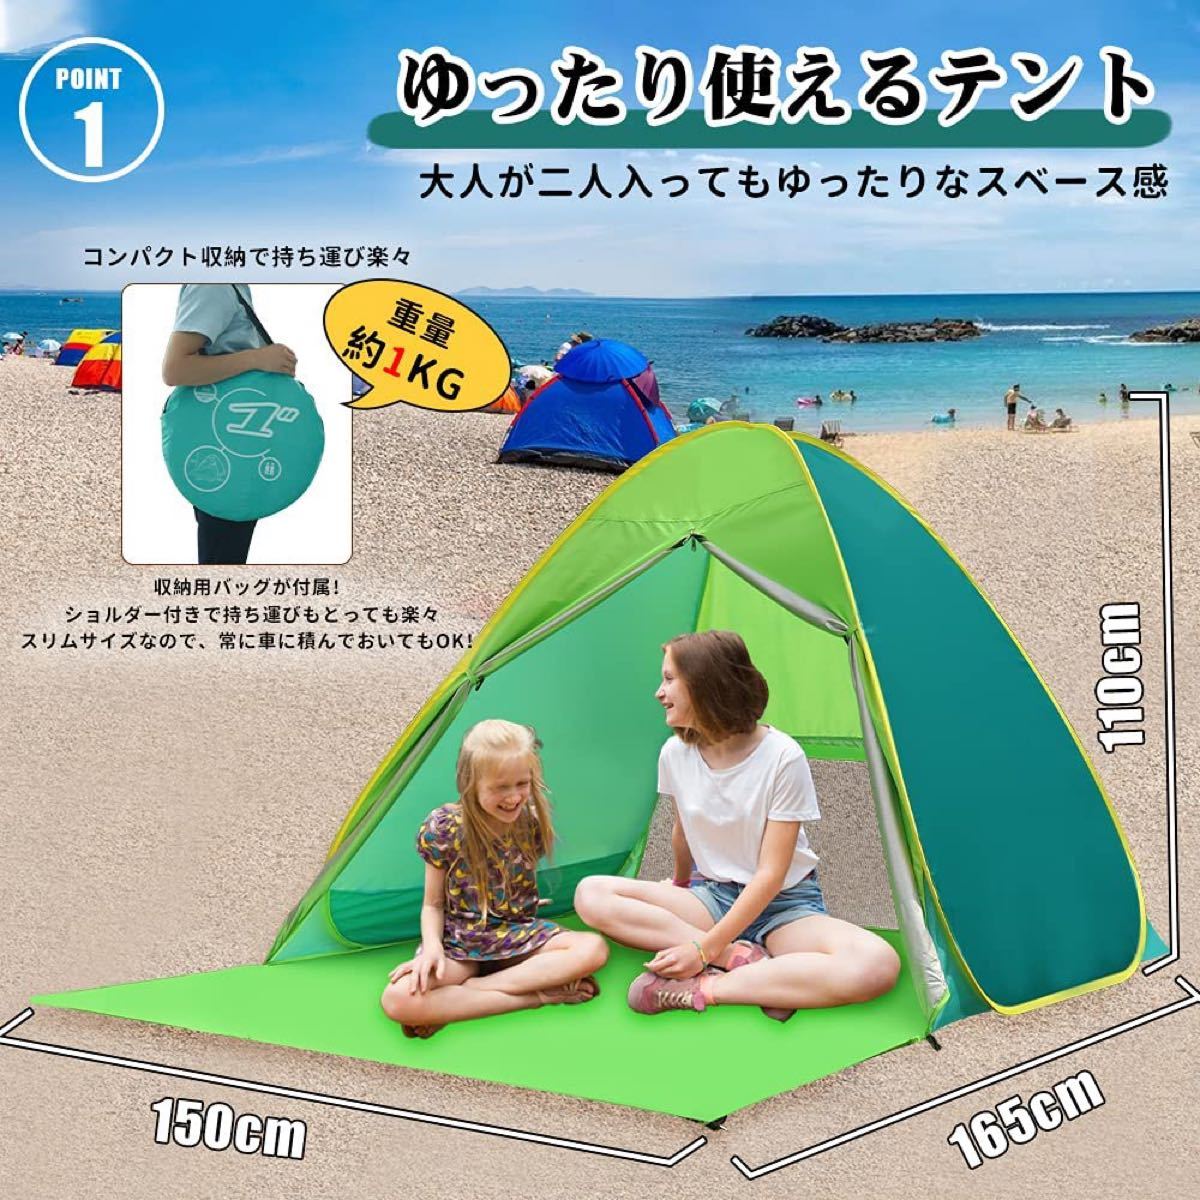 Ribitek ワンタッチ テント ポップアップテント サンシェードテント 日除けテント 組み立て不要 設置簡単